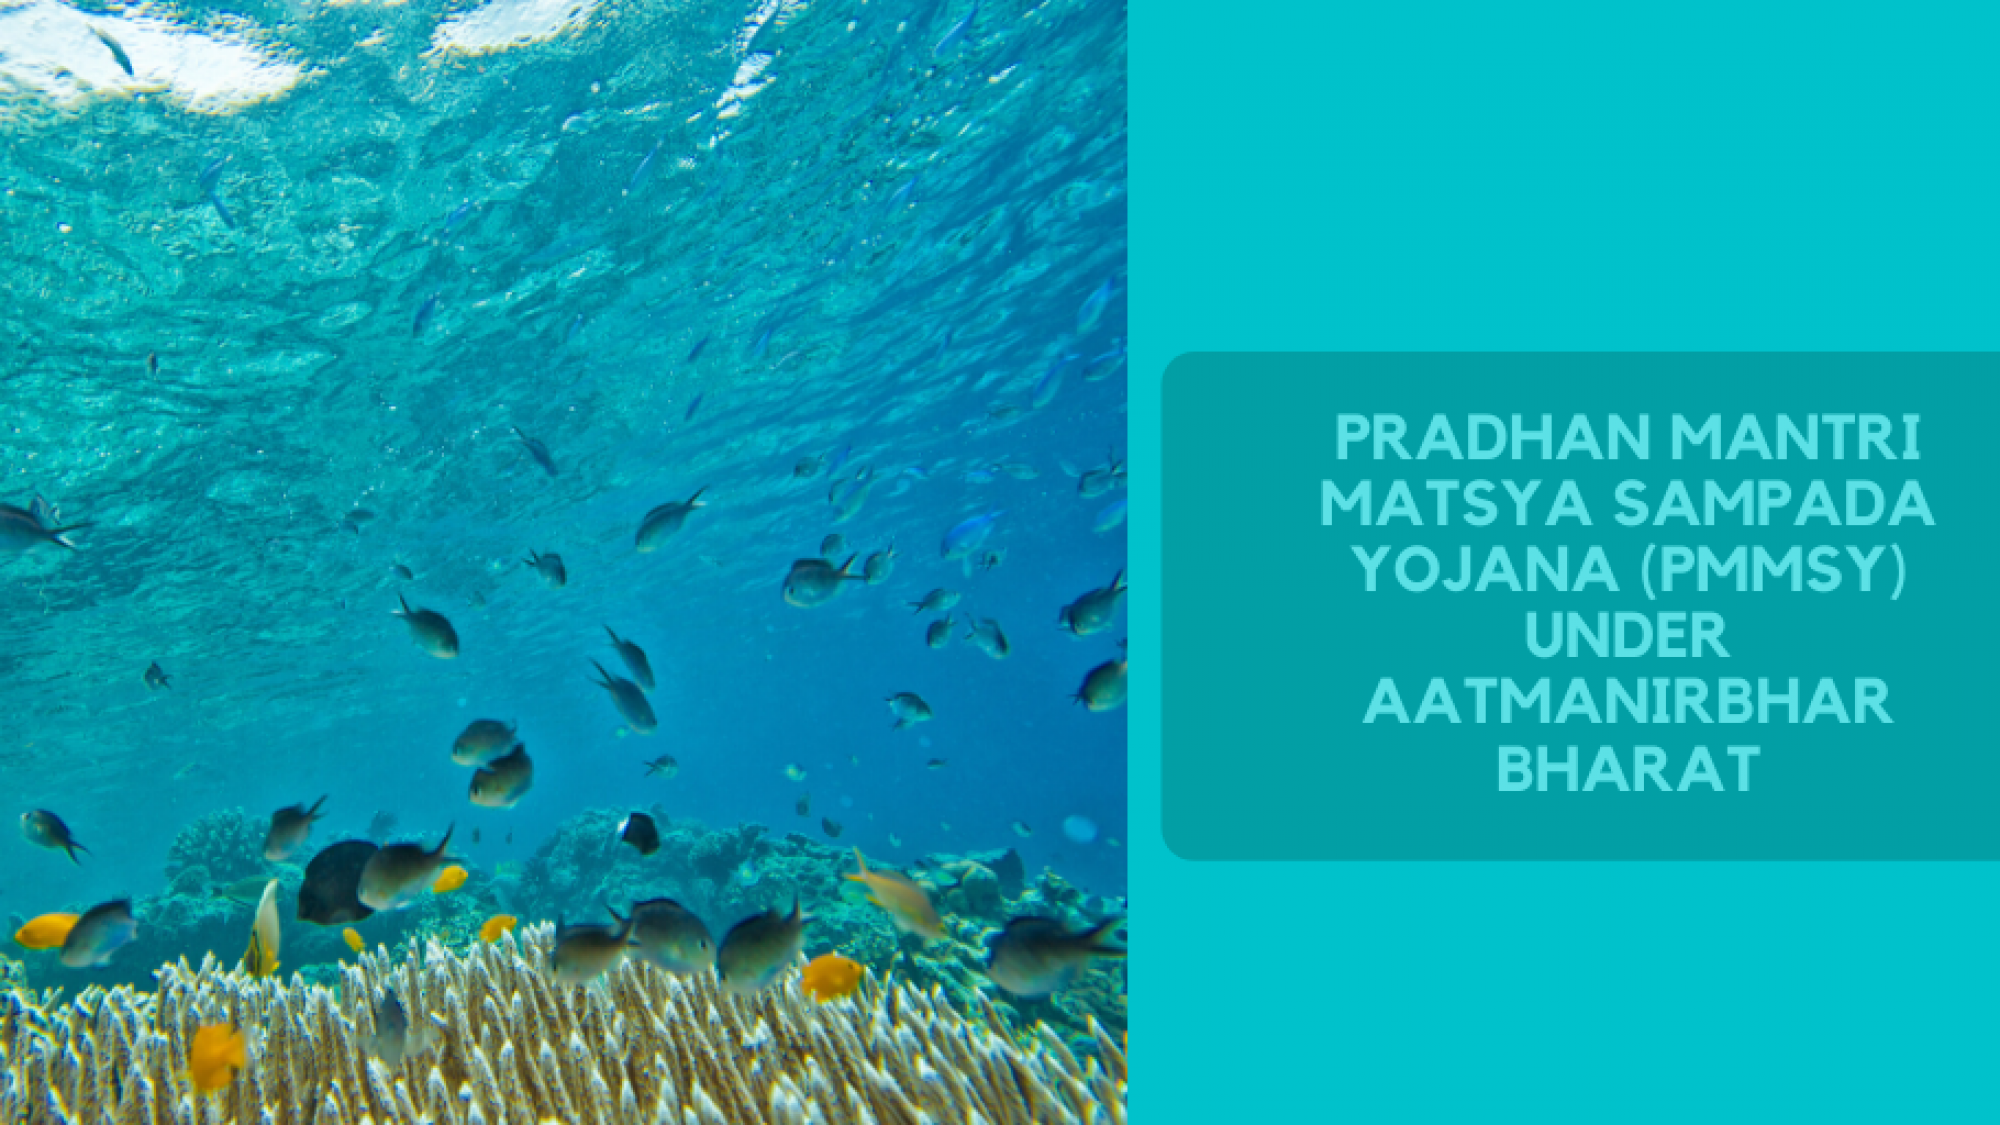 Fisheries scheme Pradhan Mantri Matsya Sampada Yojana (PMMSY)